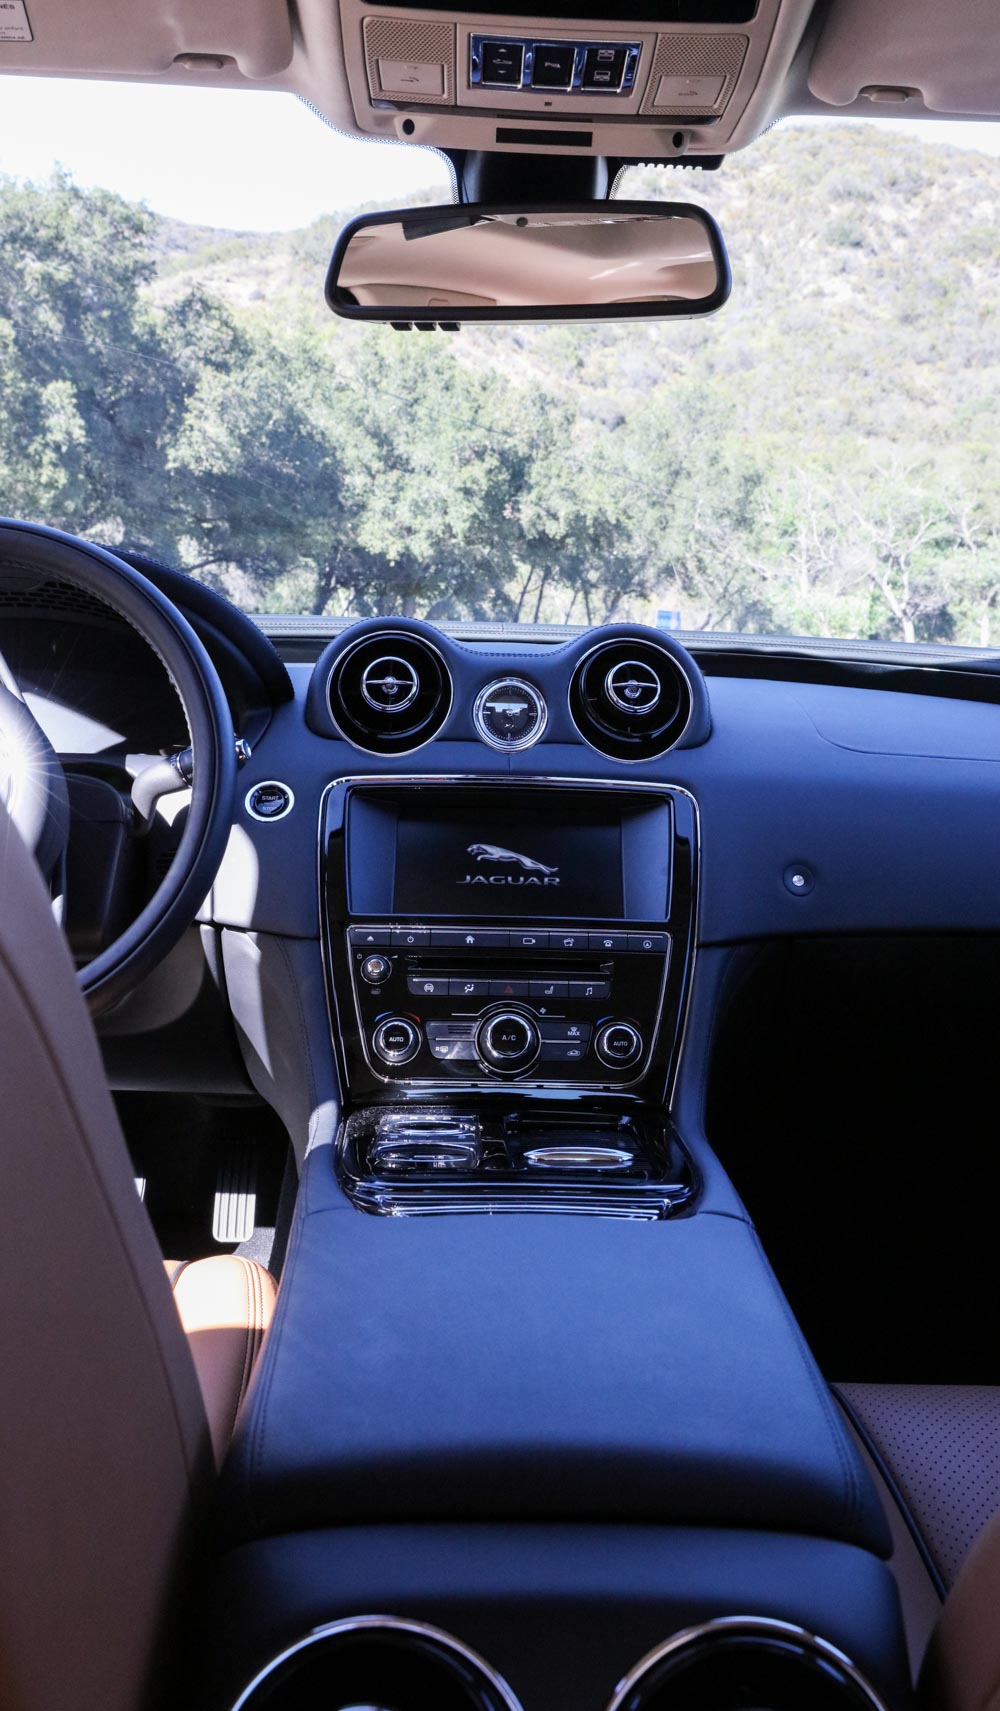 Car & Watch Review: Jaguar XJ & Bremont Jaguar MkI Wrist Time Reviews 